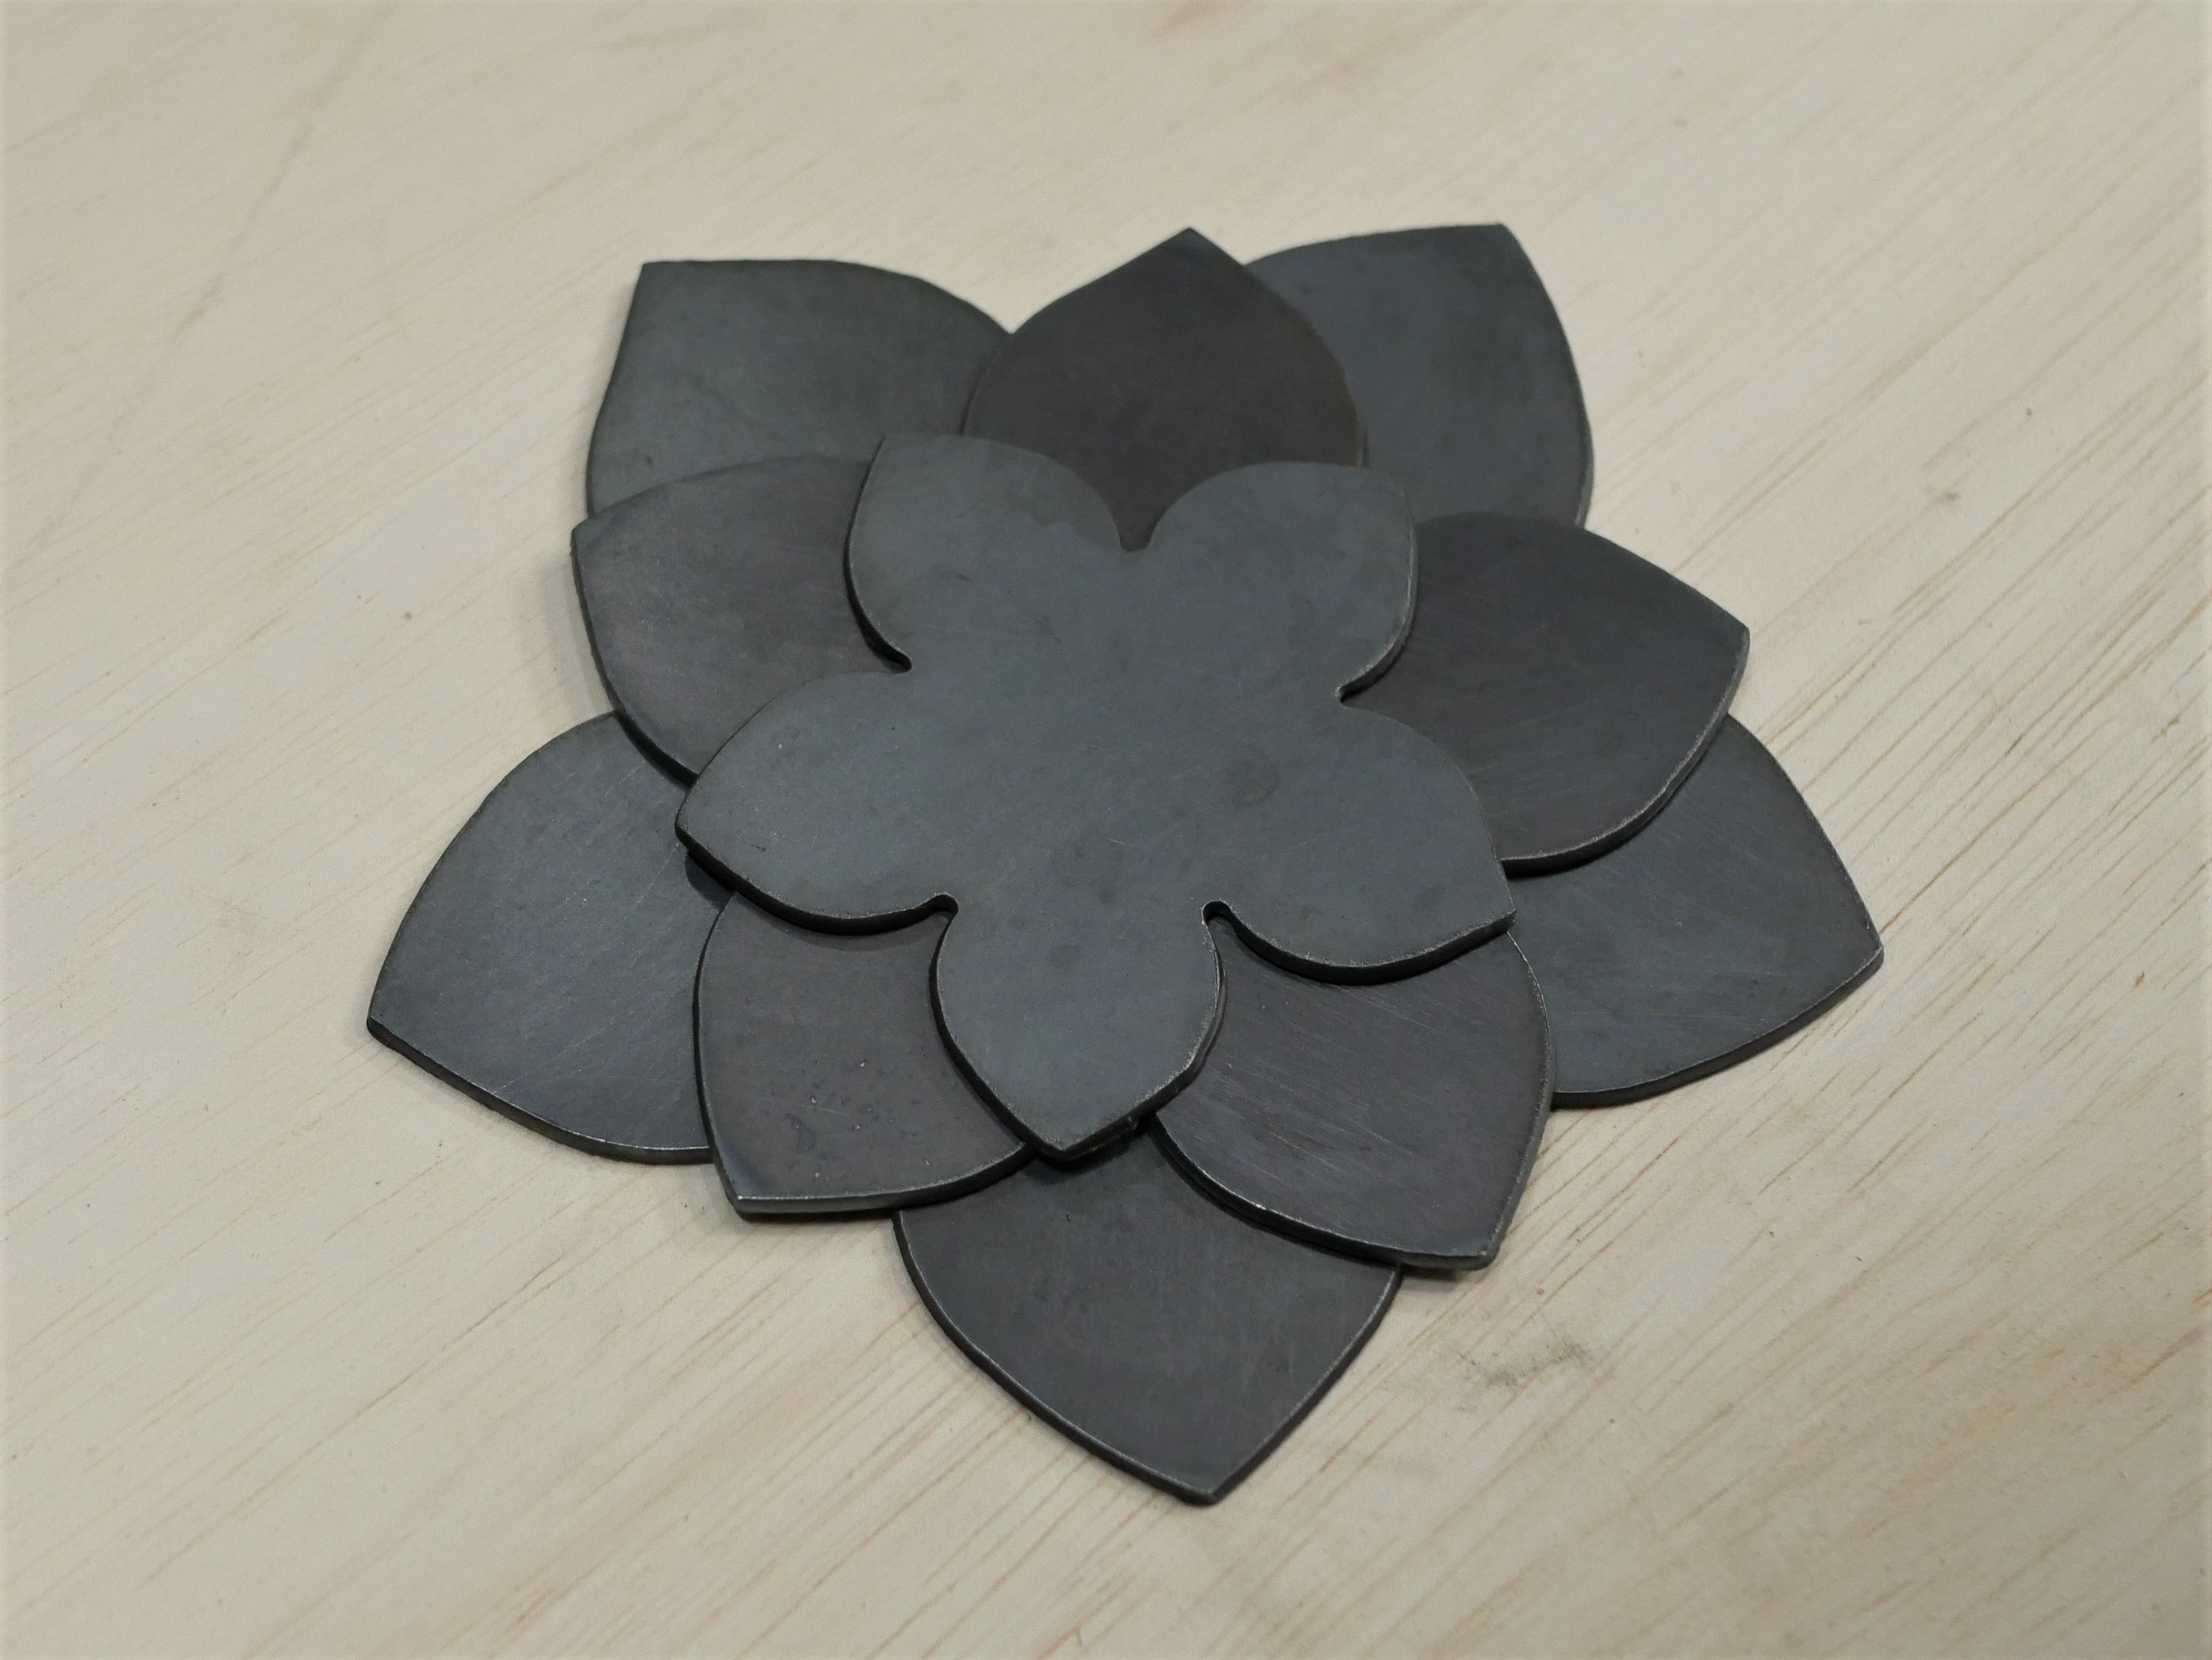 Blacksmith chrysanthemum flower blanks unfinished ready to forge 